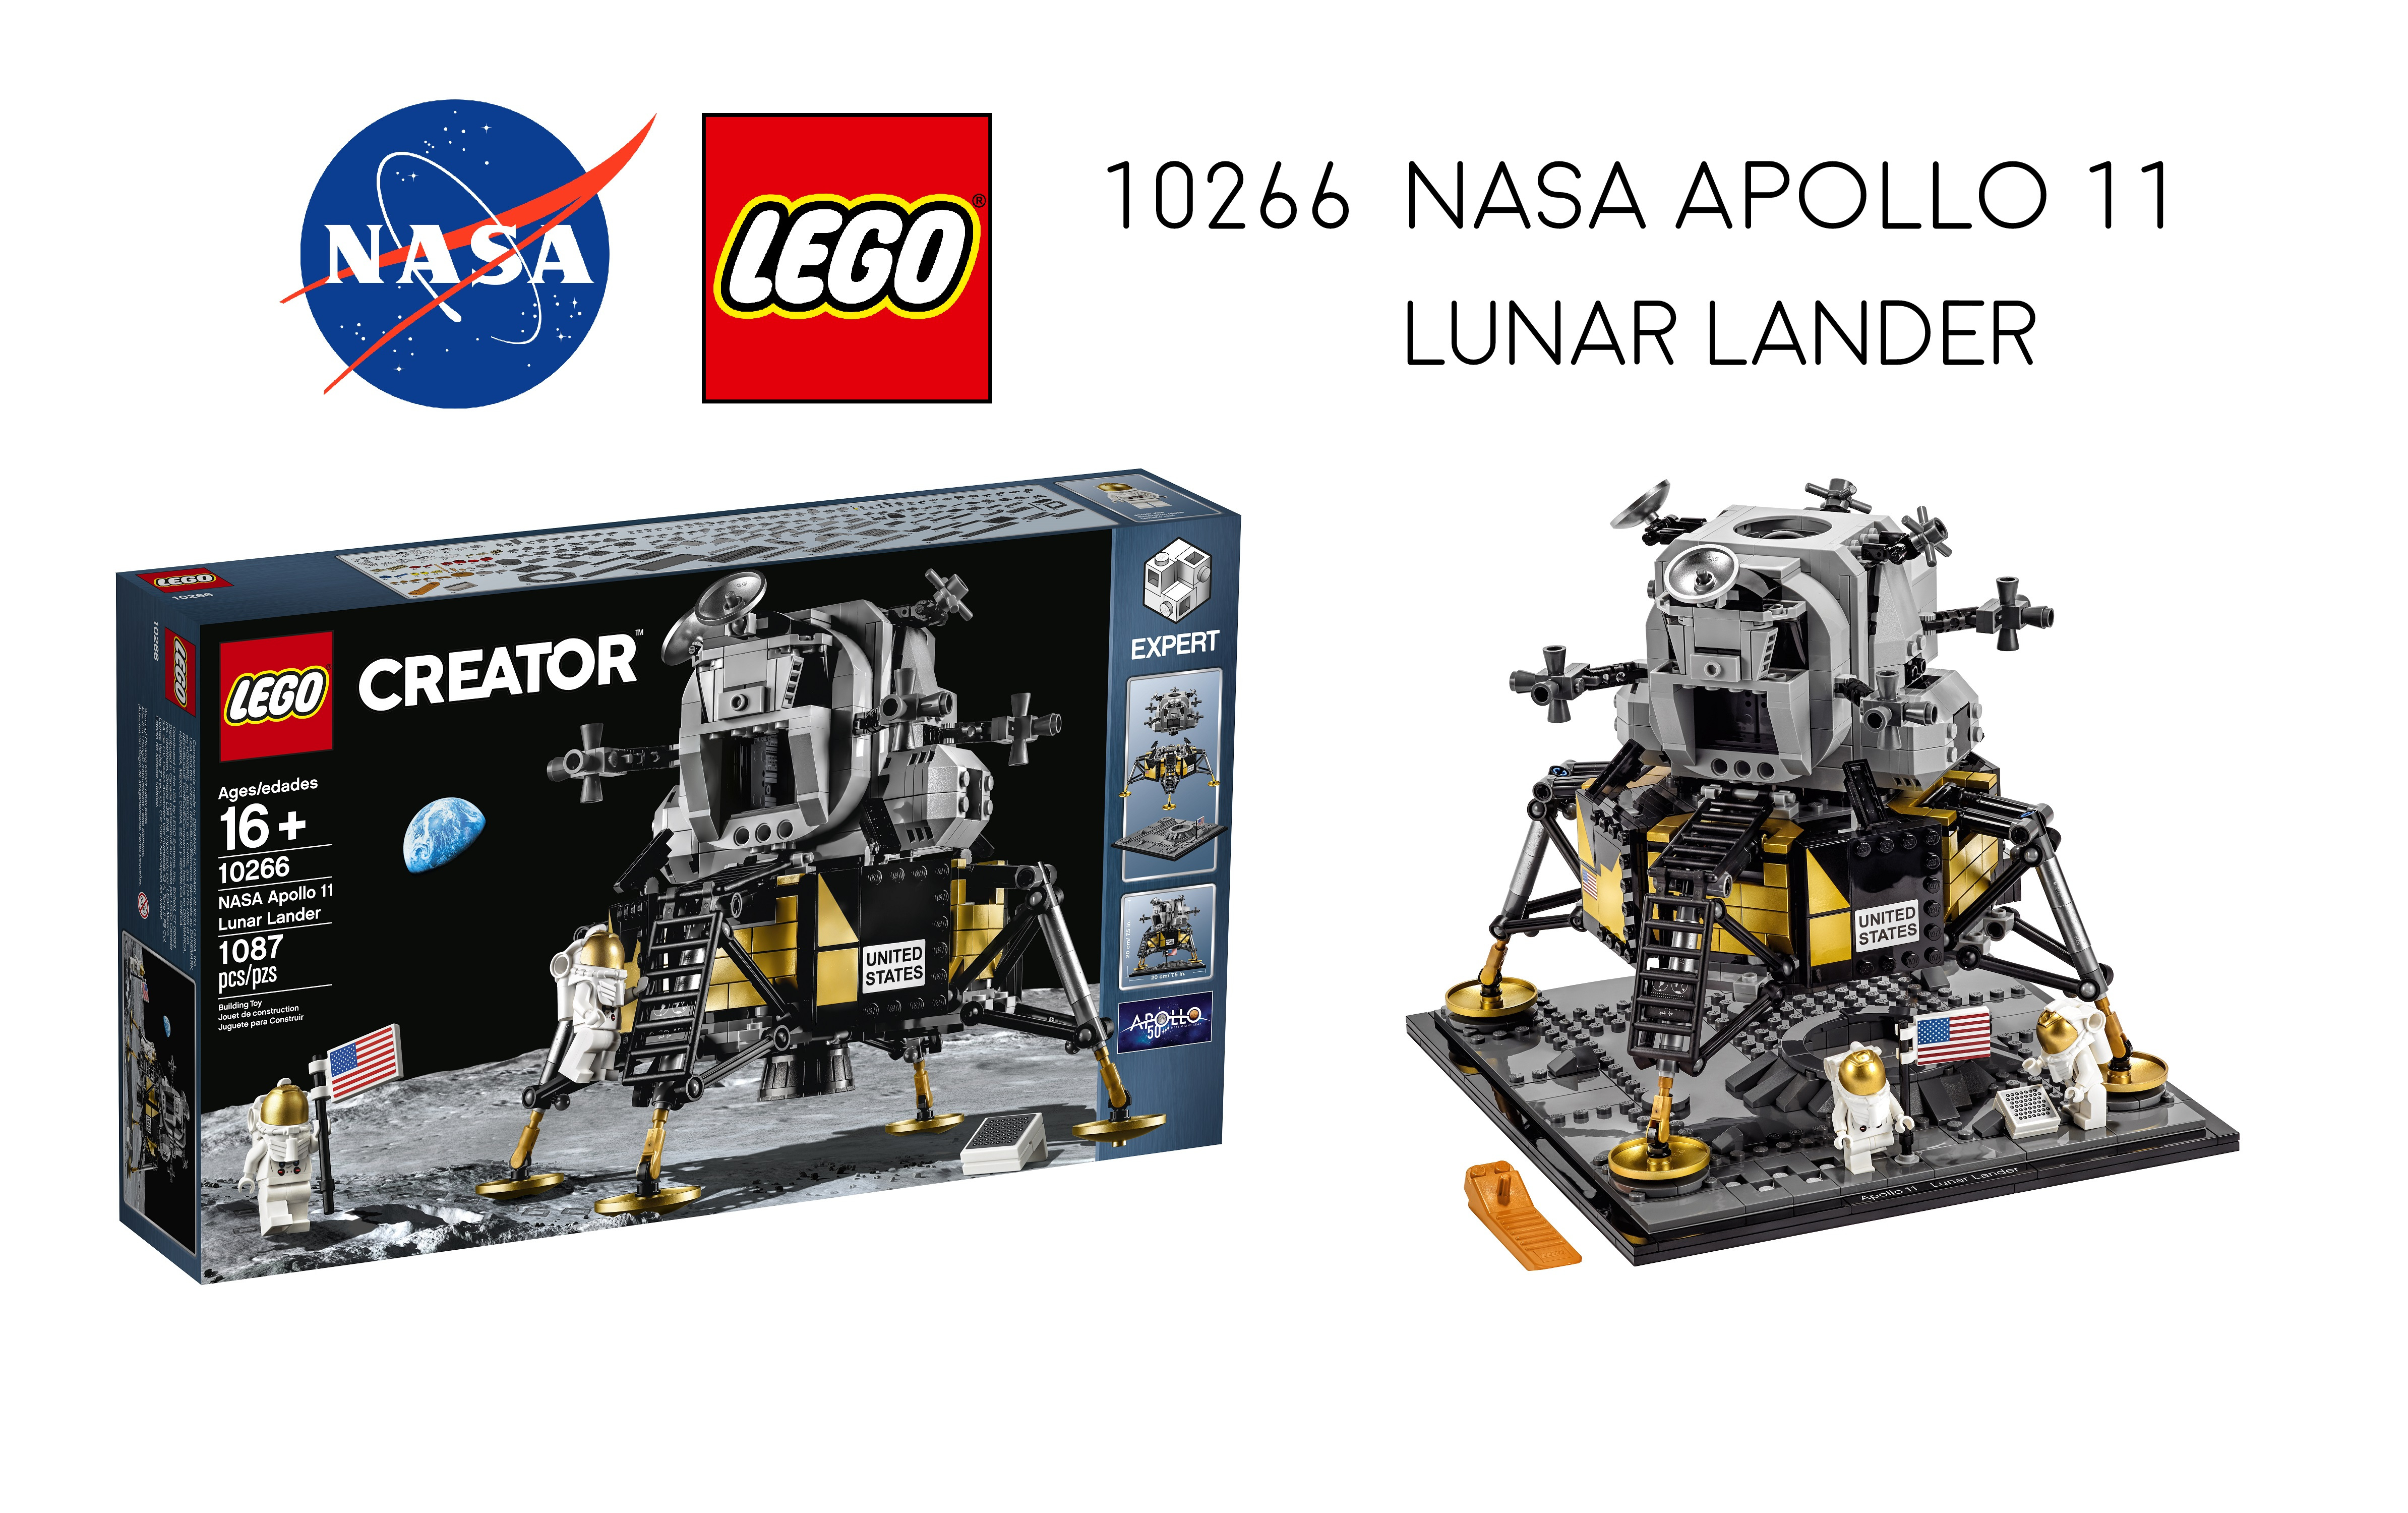 Blandet Lægge sammen hektar Celebrate the 50th anniversary of the moon landing with LEGO 10266 NASA  Apollo 11 Lunar Lander - Jay's Brick Blog